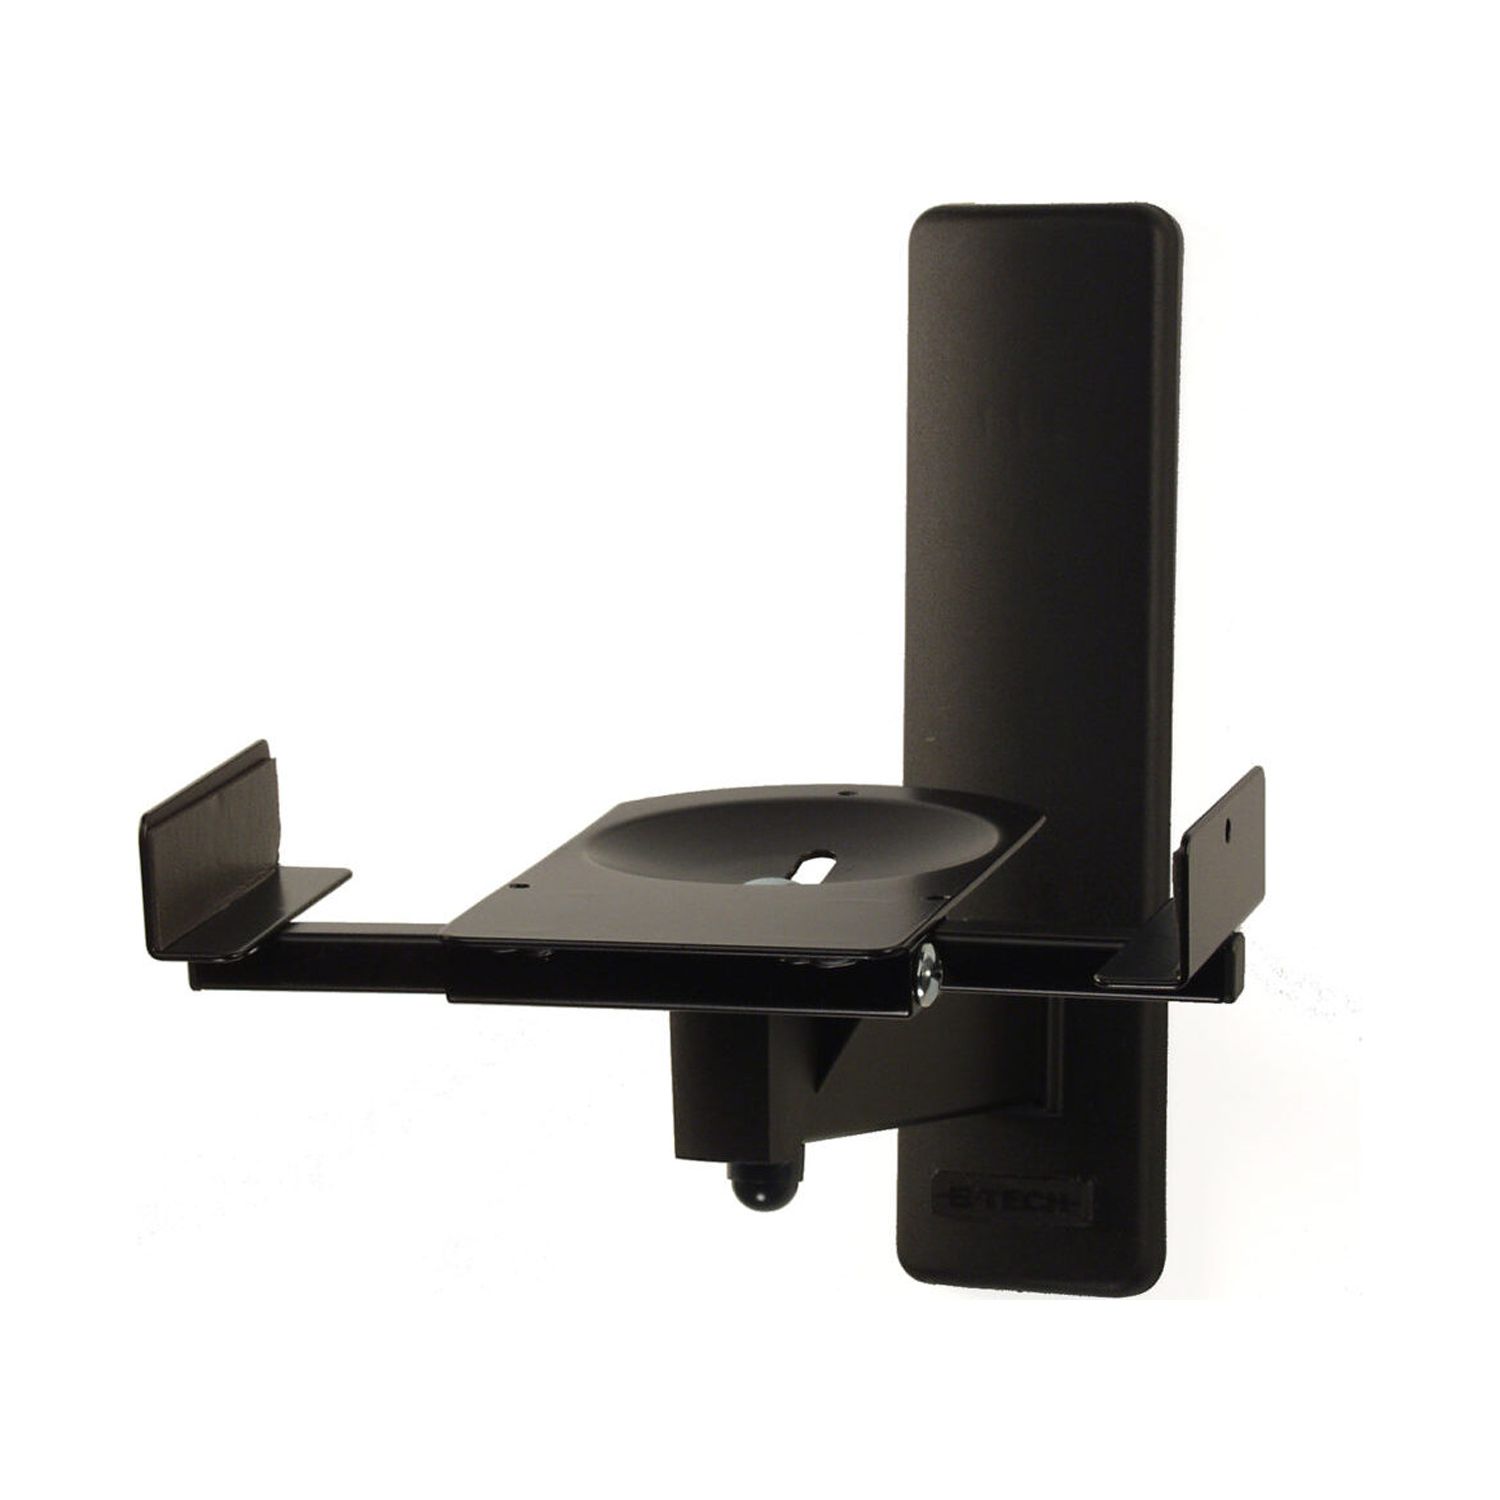 Rocelco B-Tech Ultra Grip-Pro Speaker Mount in Black Finish (Set of 2) - image 3 of 4